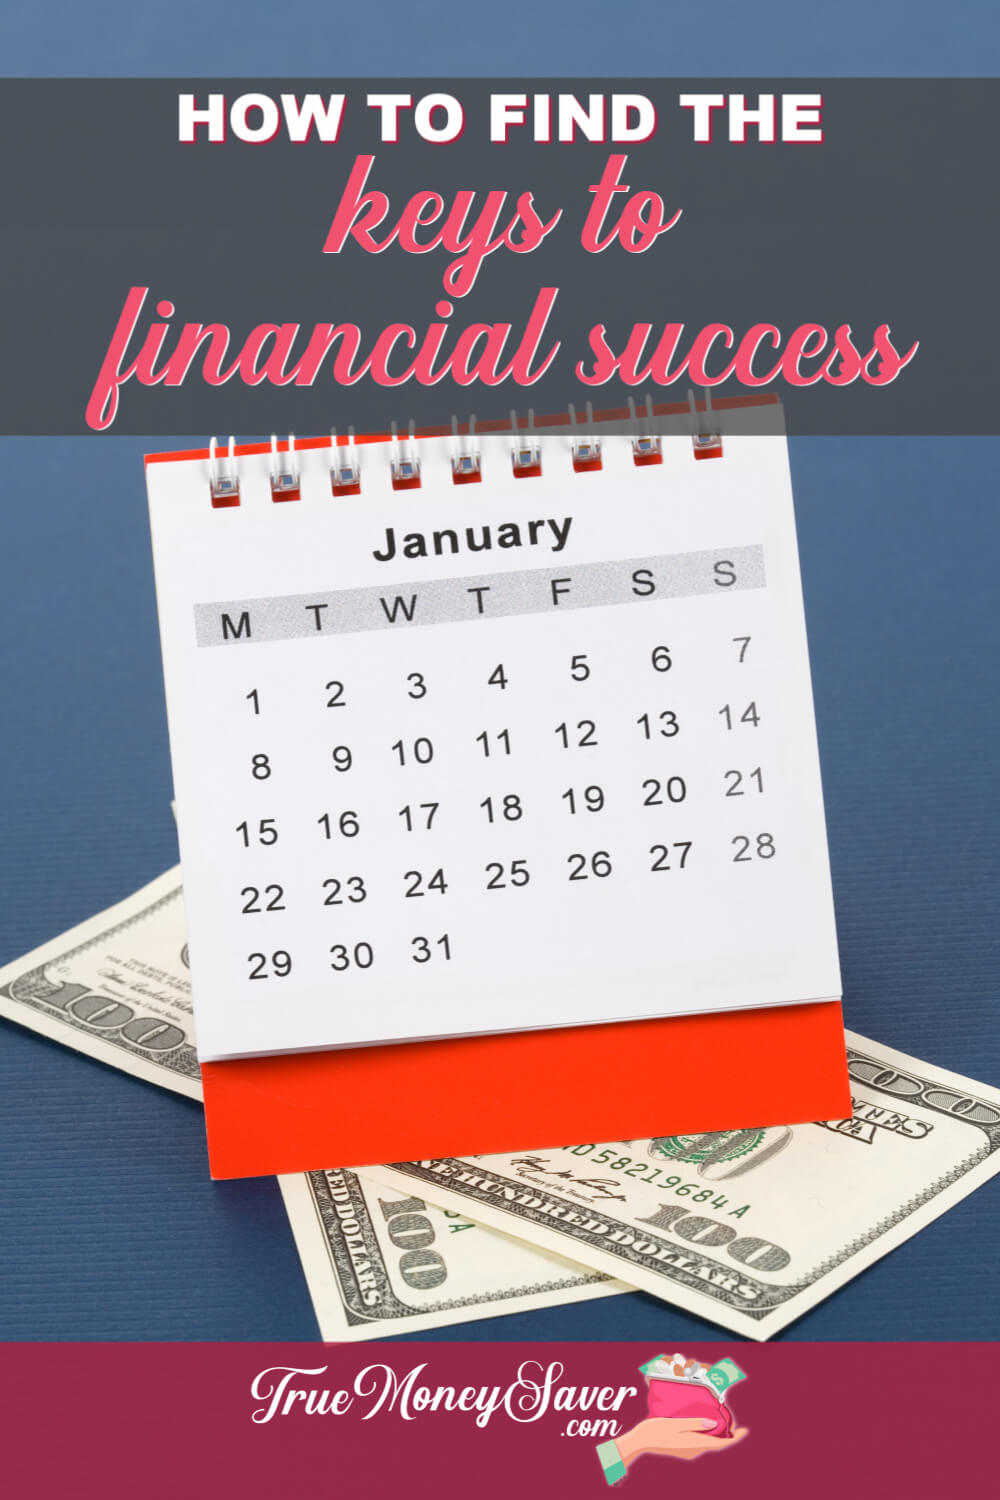 keys to financial success